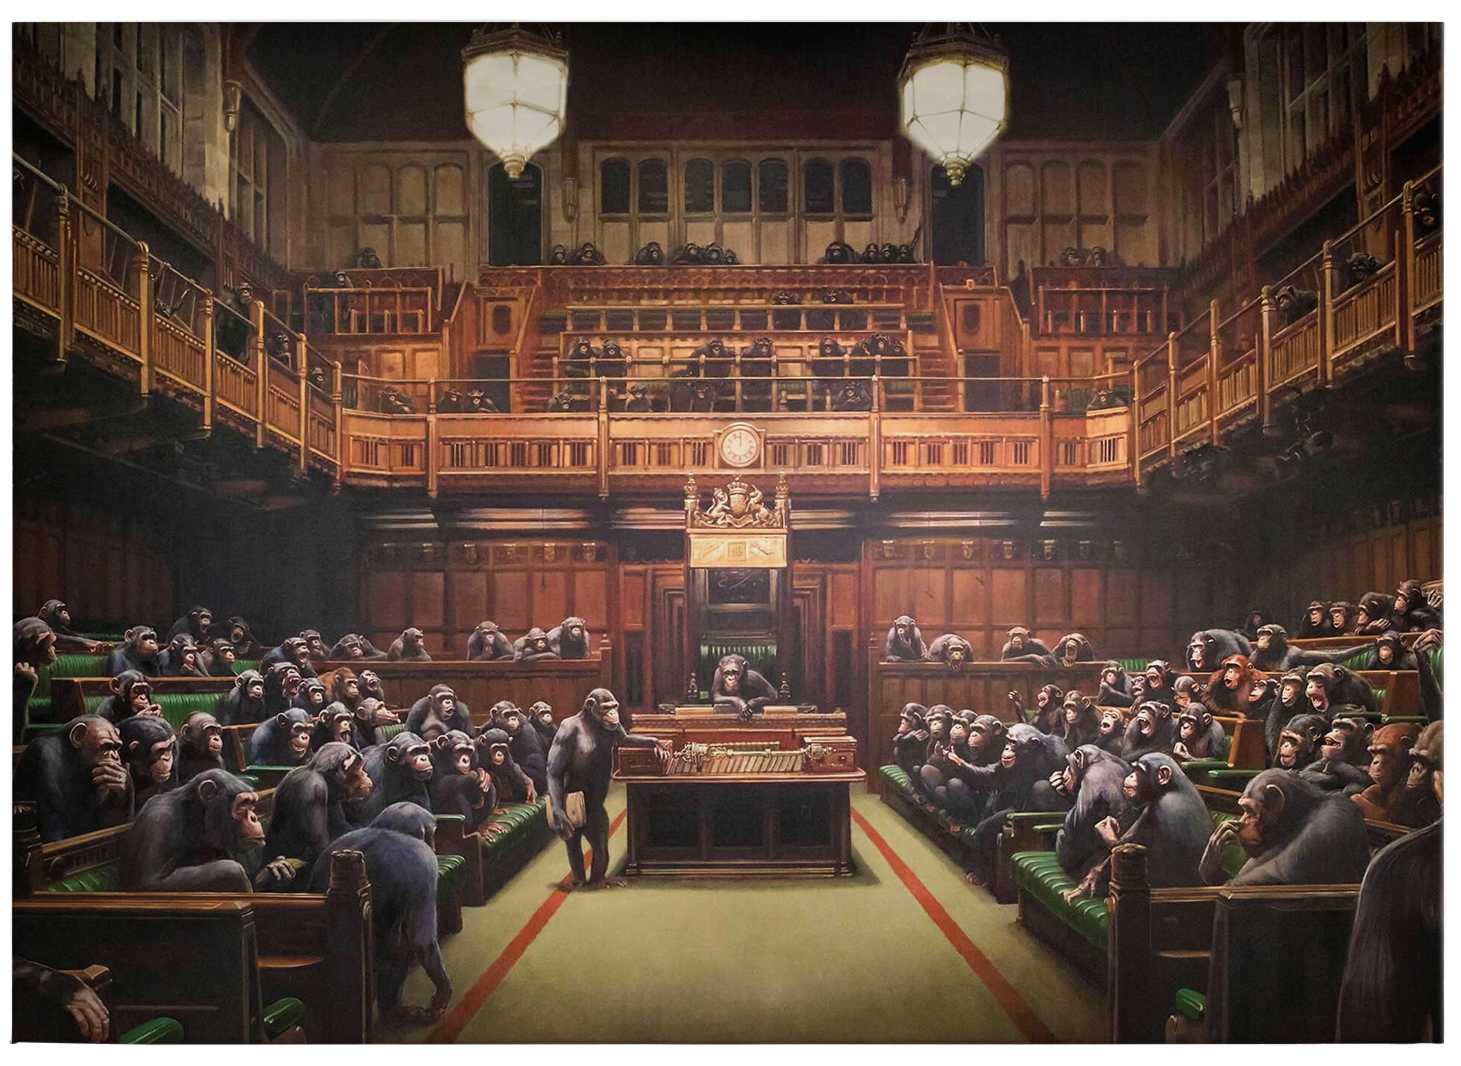             Leinwandbild Banksy "Devolved Parliament" – 0,70 m x 0,50 m
        